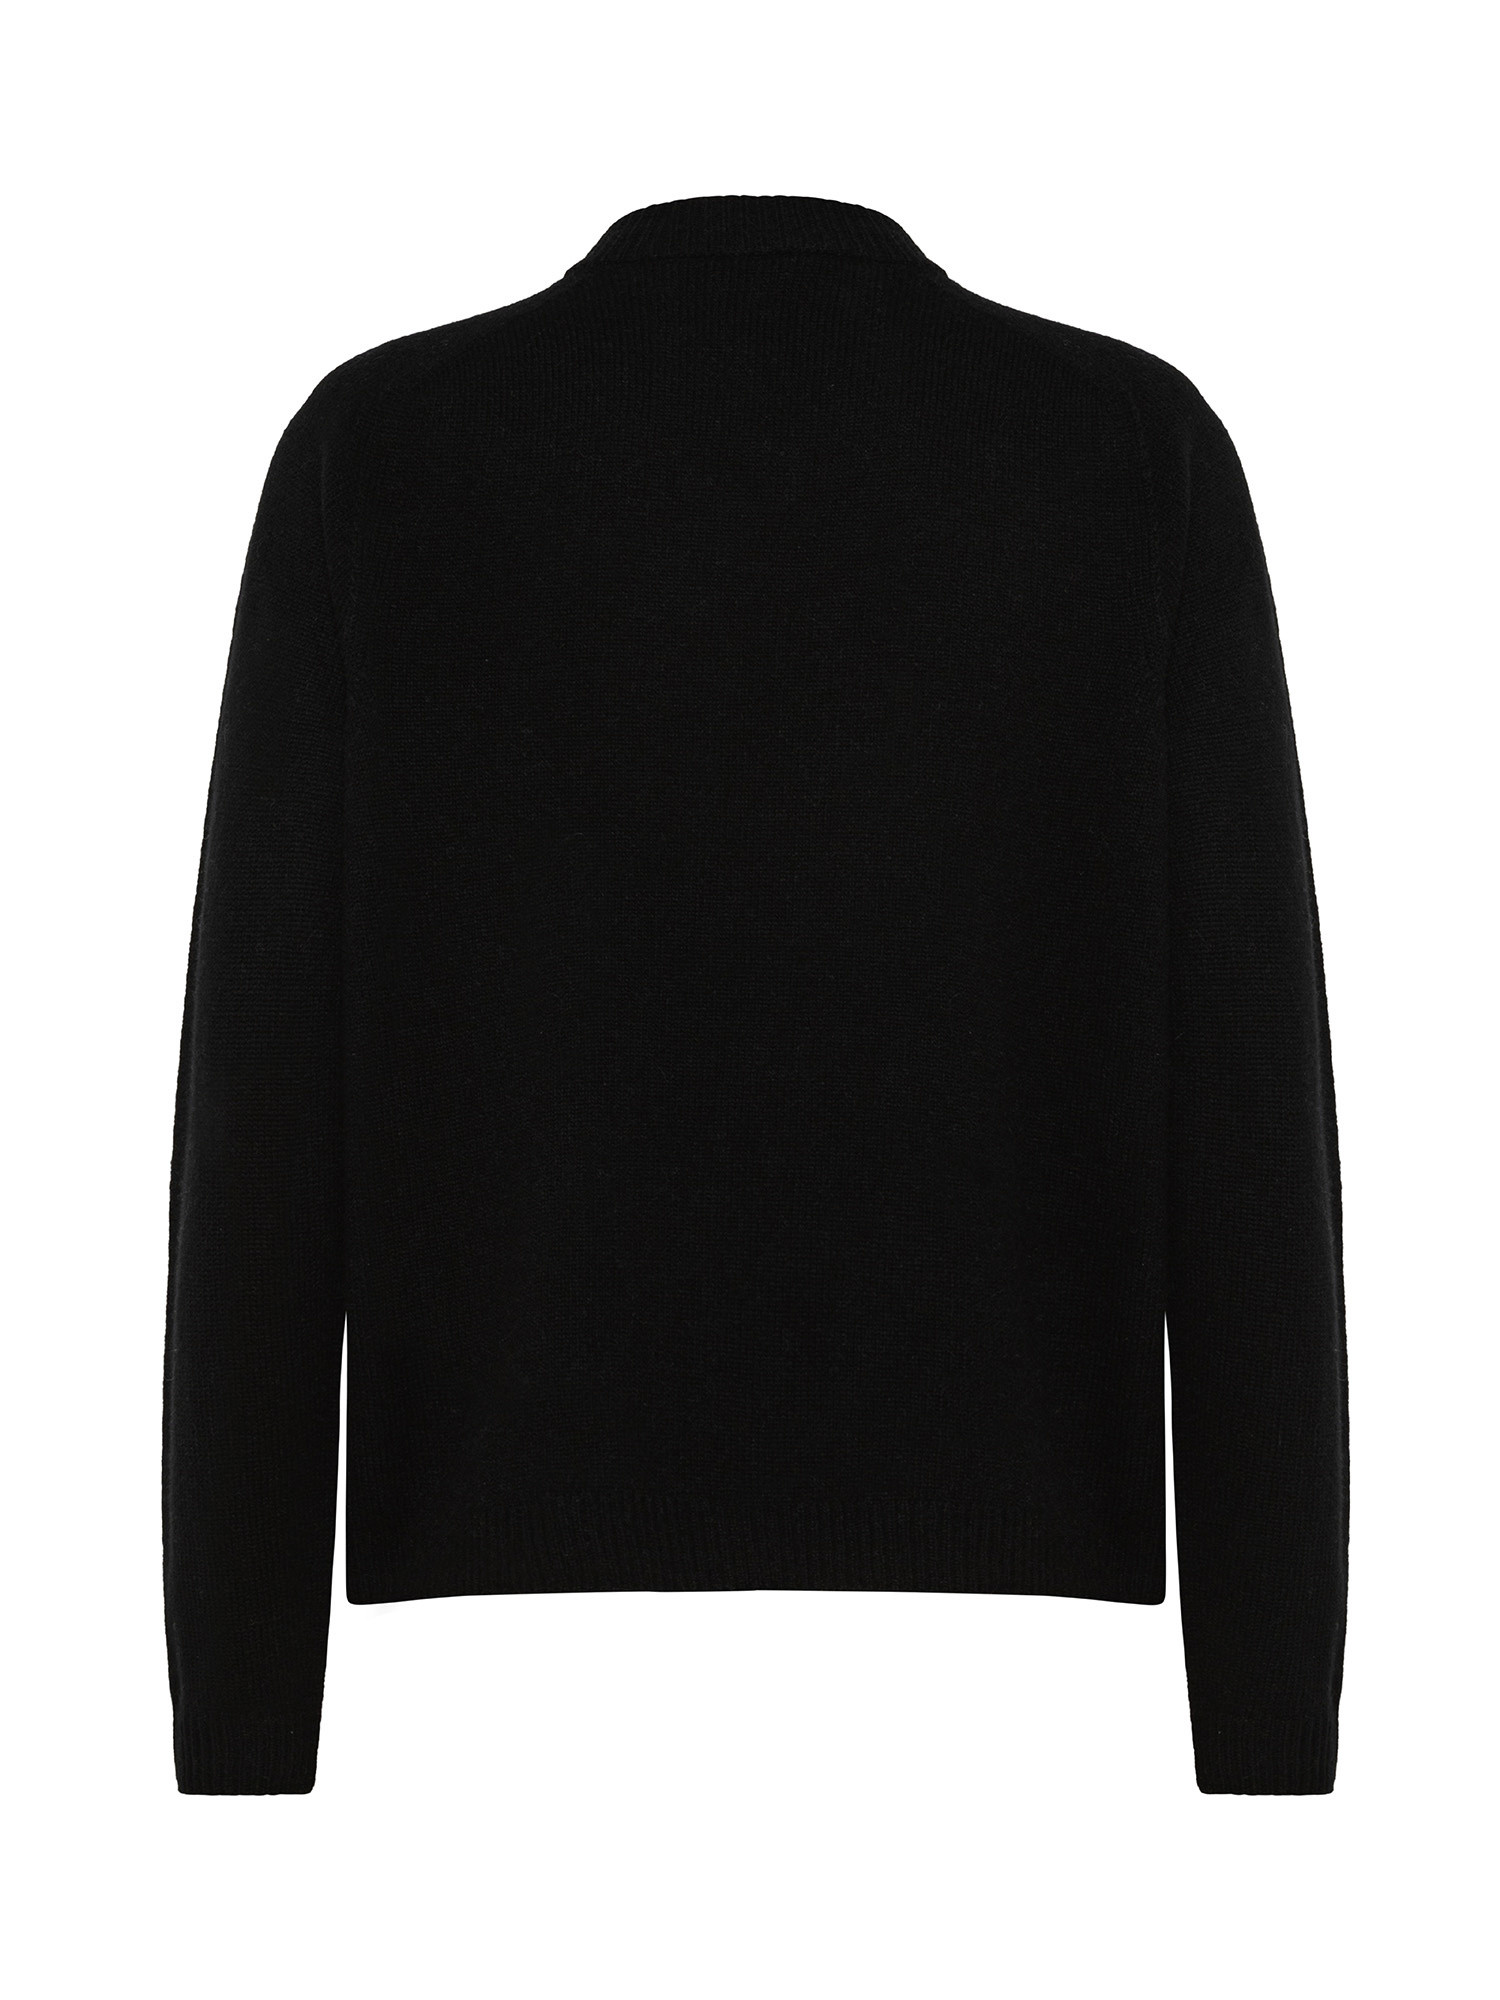 K Collection - Crewneck sweater, Black, large image number 1